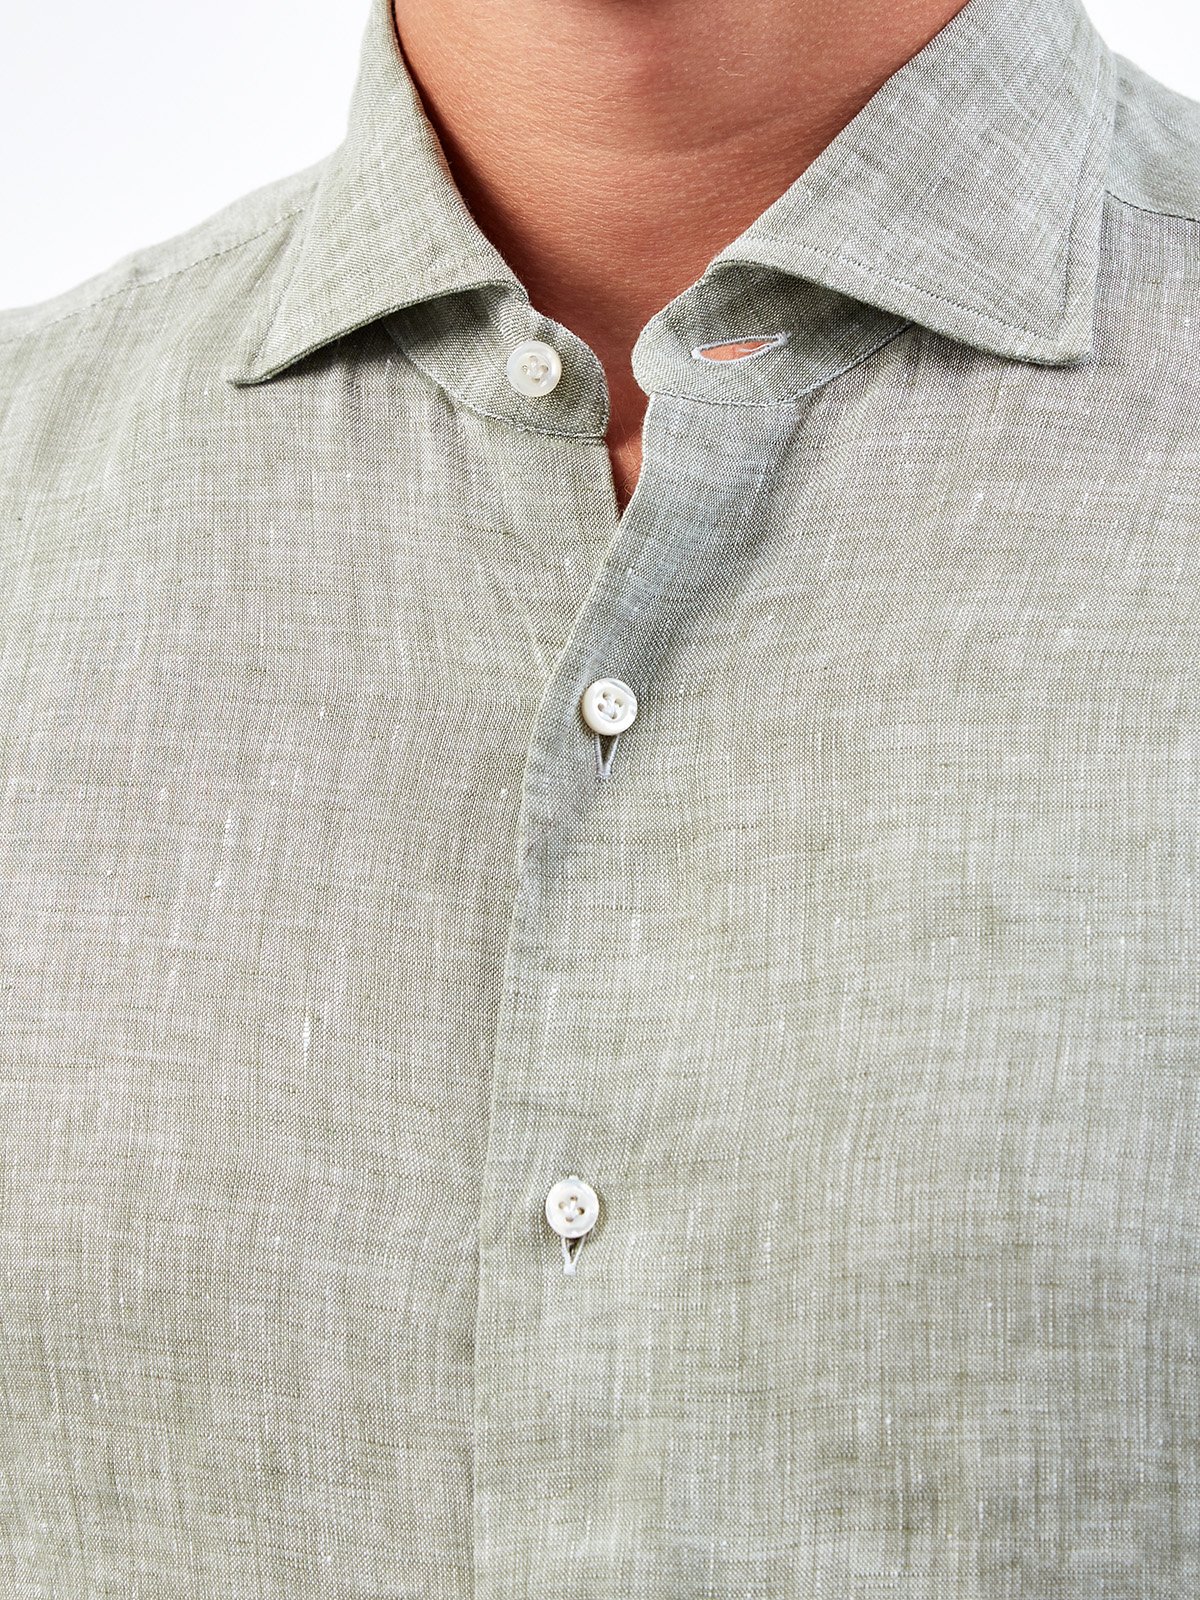 Рубашка в стиле leisure из дышащей льняной ткани LUCIANO BARBERA, цвет серый, размер 48;50;52;54 - фото 5